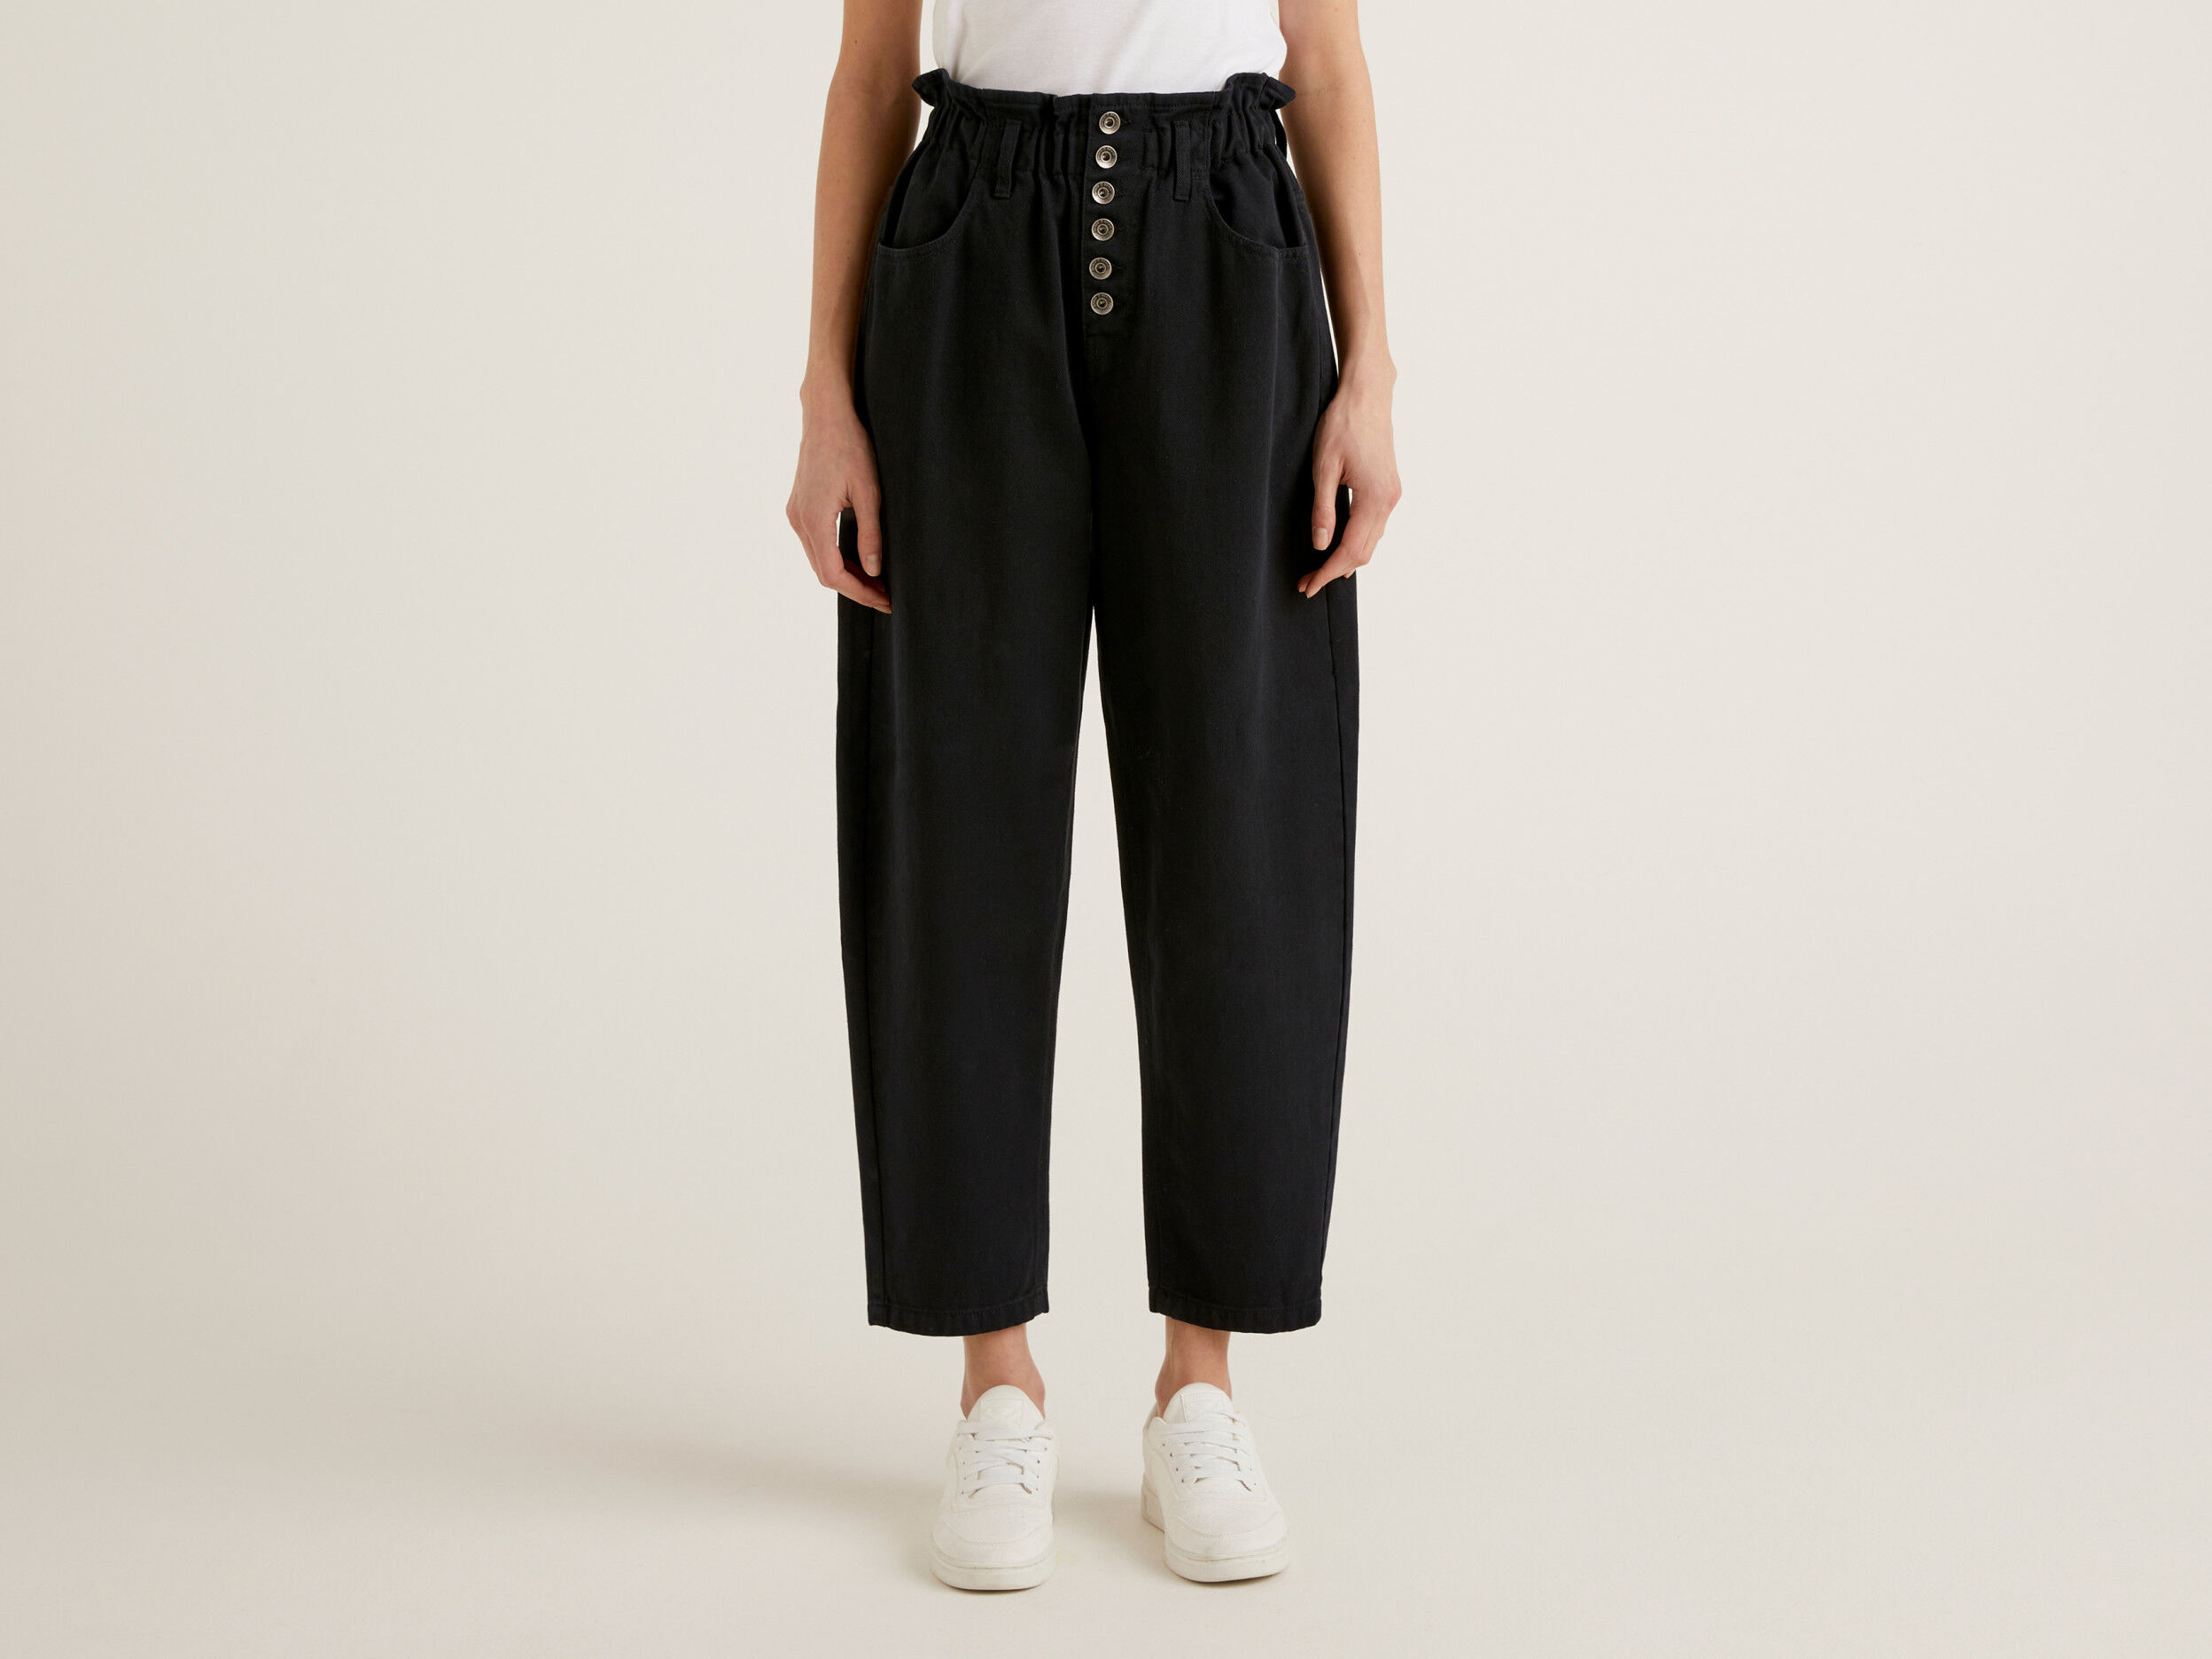 UK Women Summer Cotton Elastic Waist Pockets Casual Loose Pants Trousers  Plus | eBay